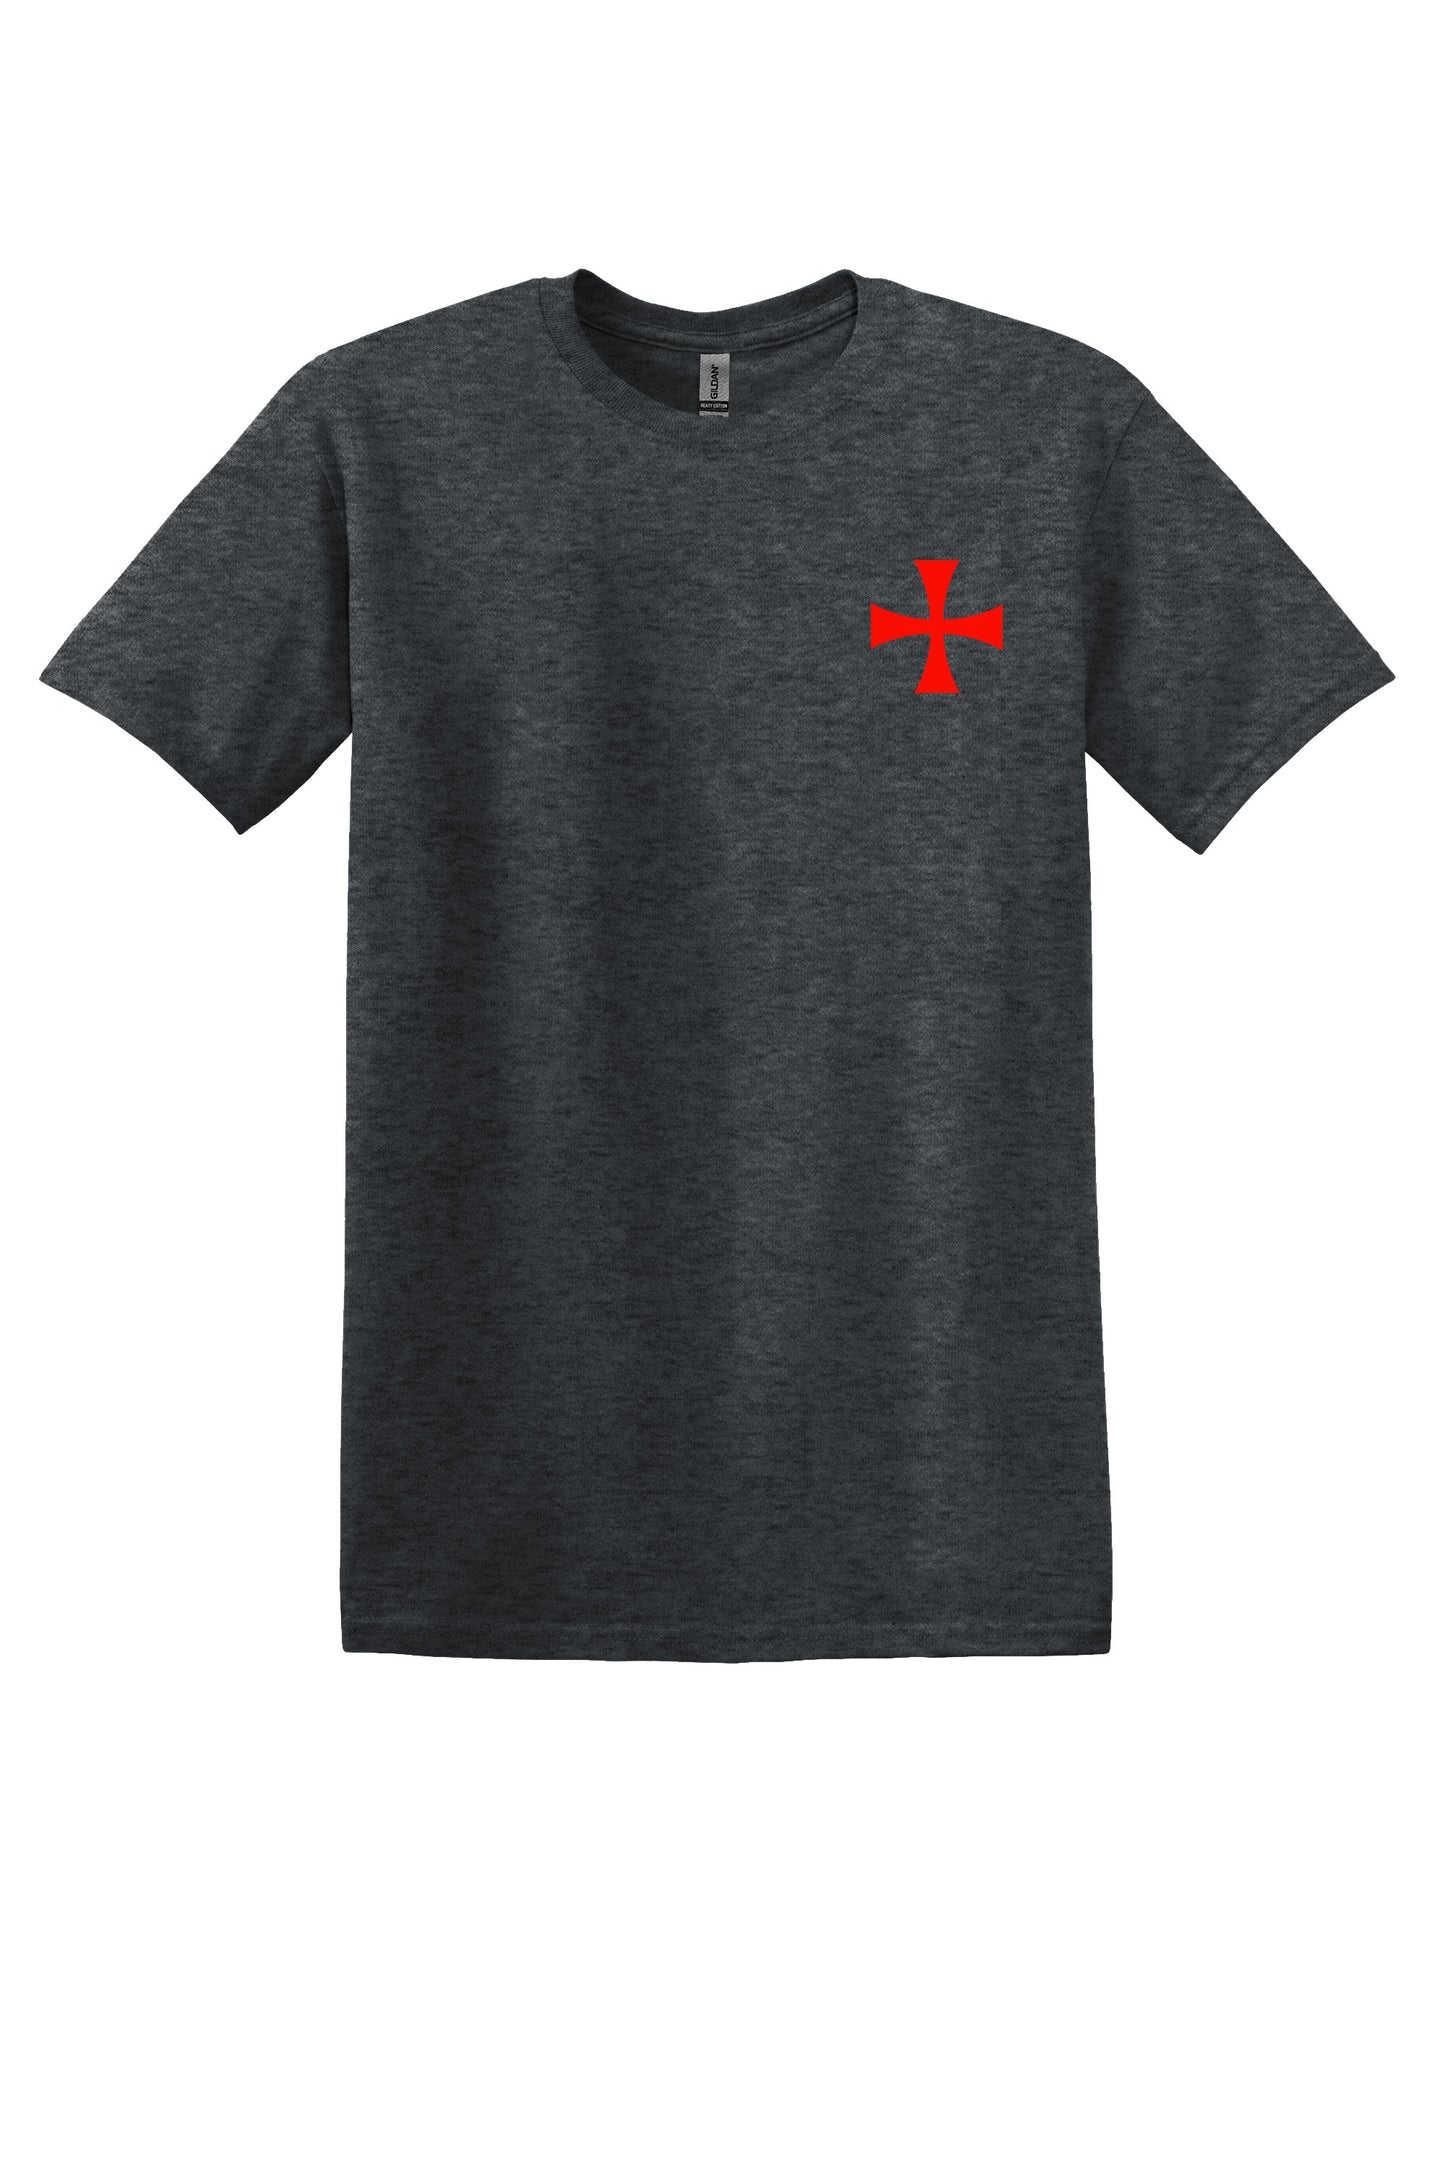 Templi Sigillum Militum Seal of the Soldier of the Temple Knights Templar Soft Style T-shirt